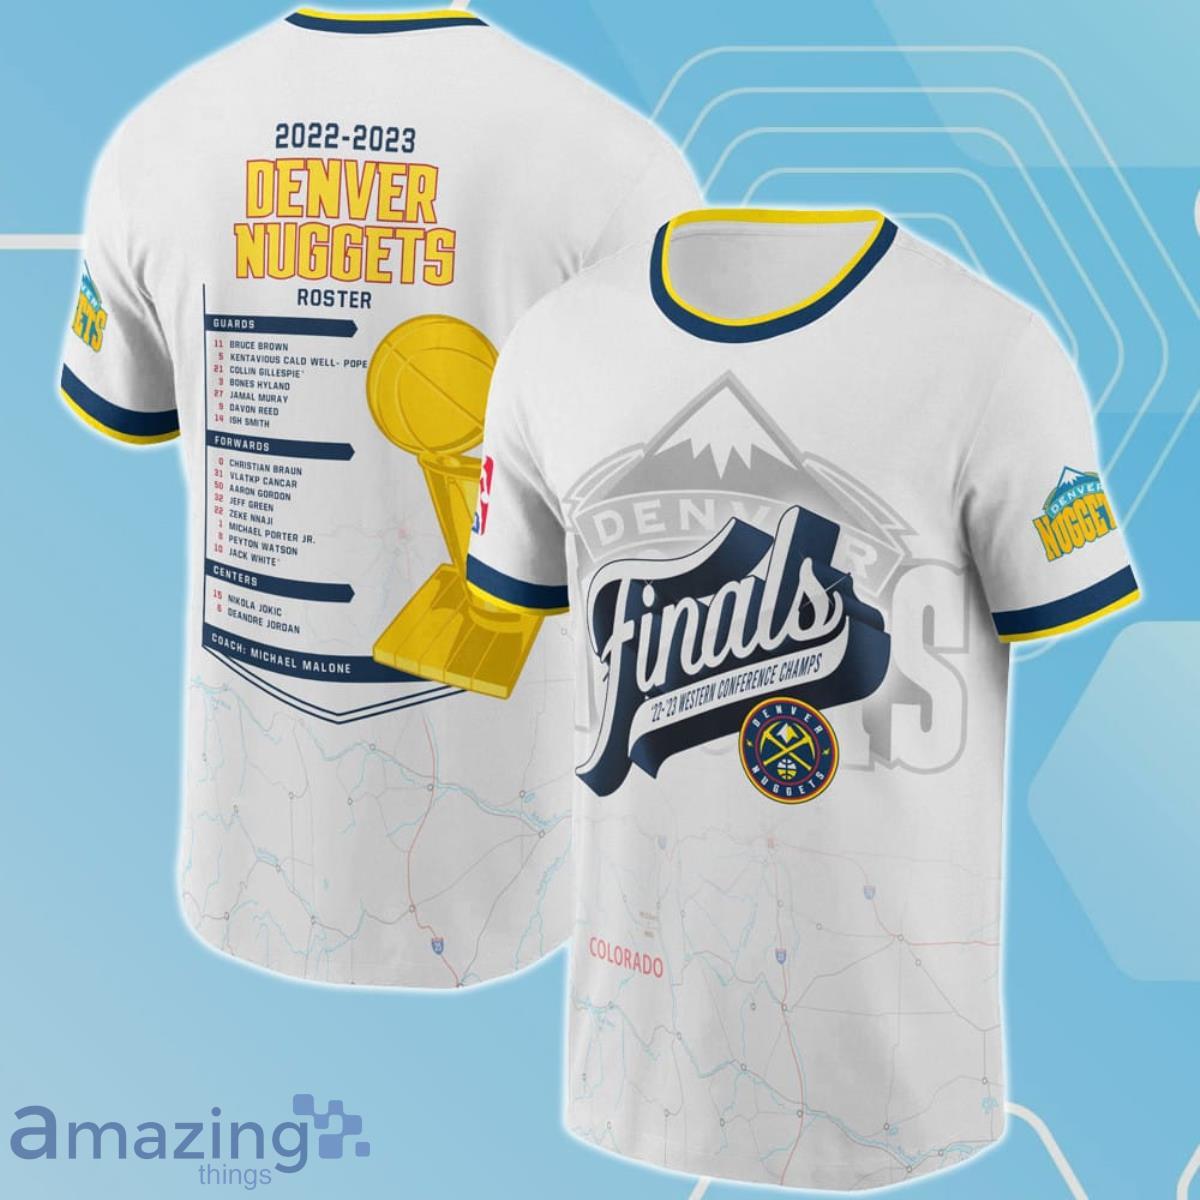 Denver Nuggets NBA Champions 2023 Pattern Print 3D Shirt For True Fans Product Photo 1